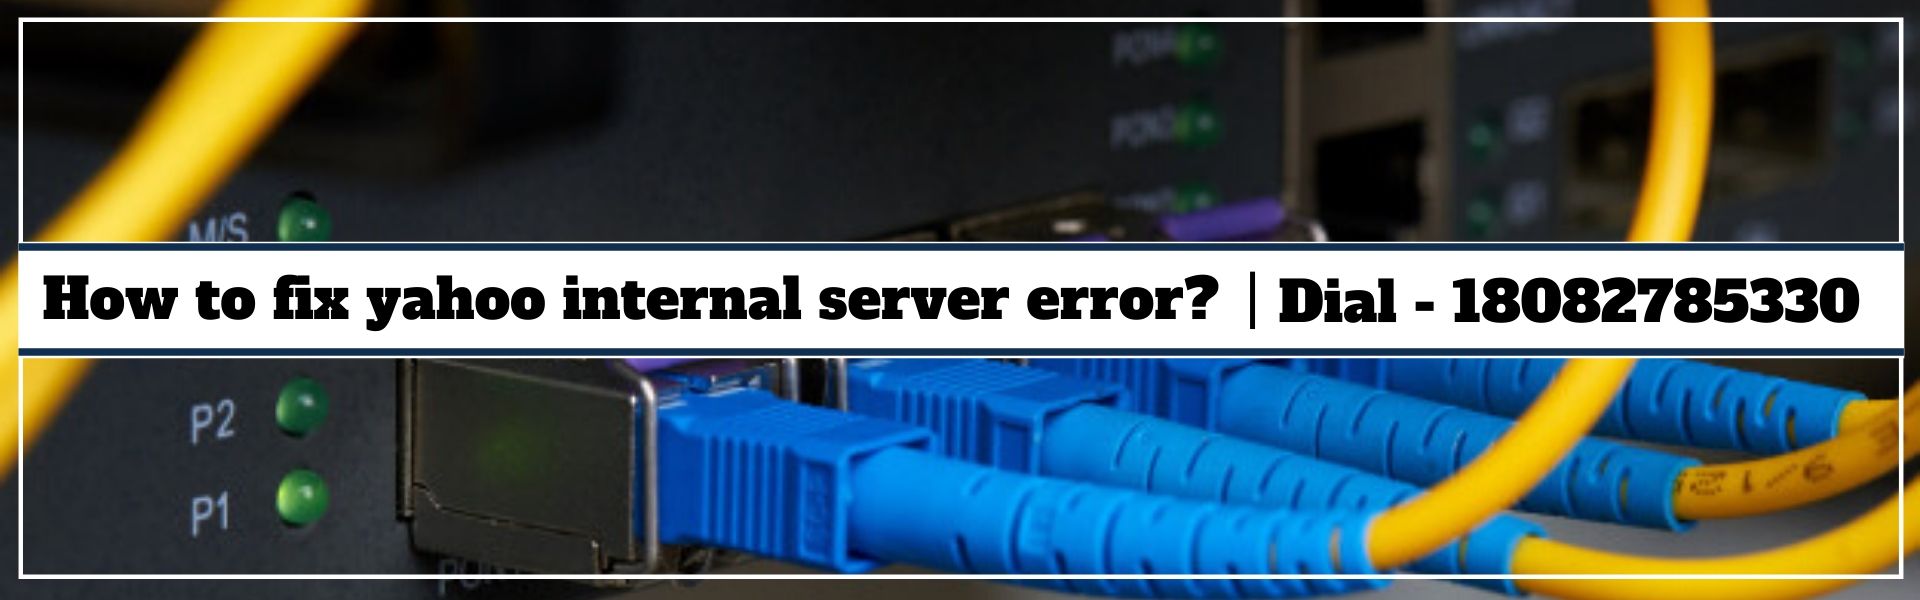 2020-04-14-04-05-07how to fix yahoo internal server error